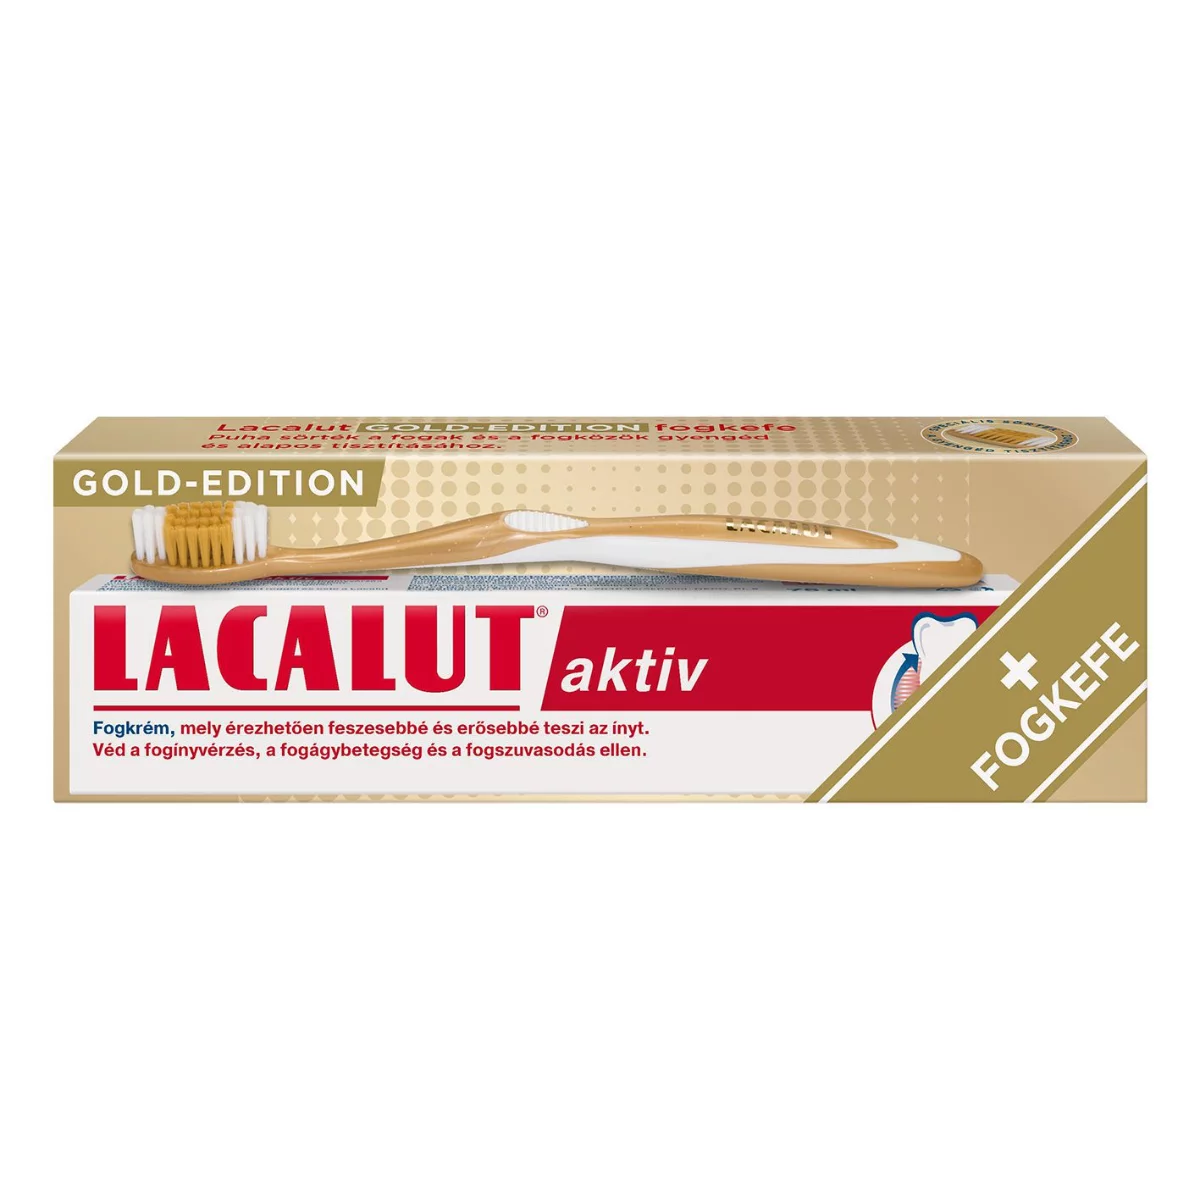 Lacalut fogkrém 75ml Aktiv + fogkefe Lacalut Gold Edition